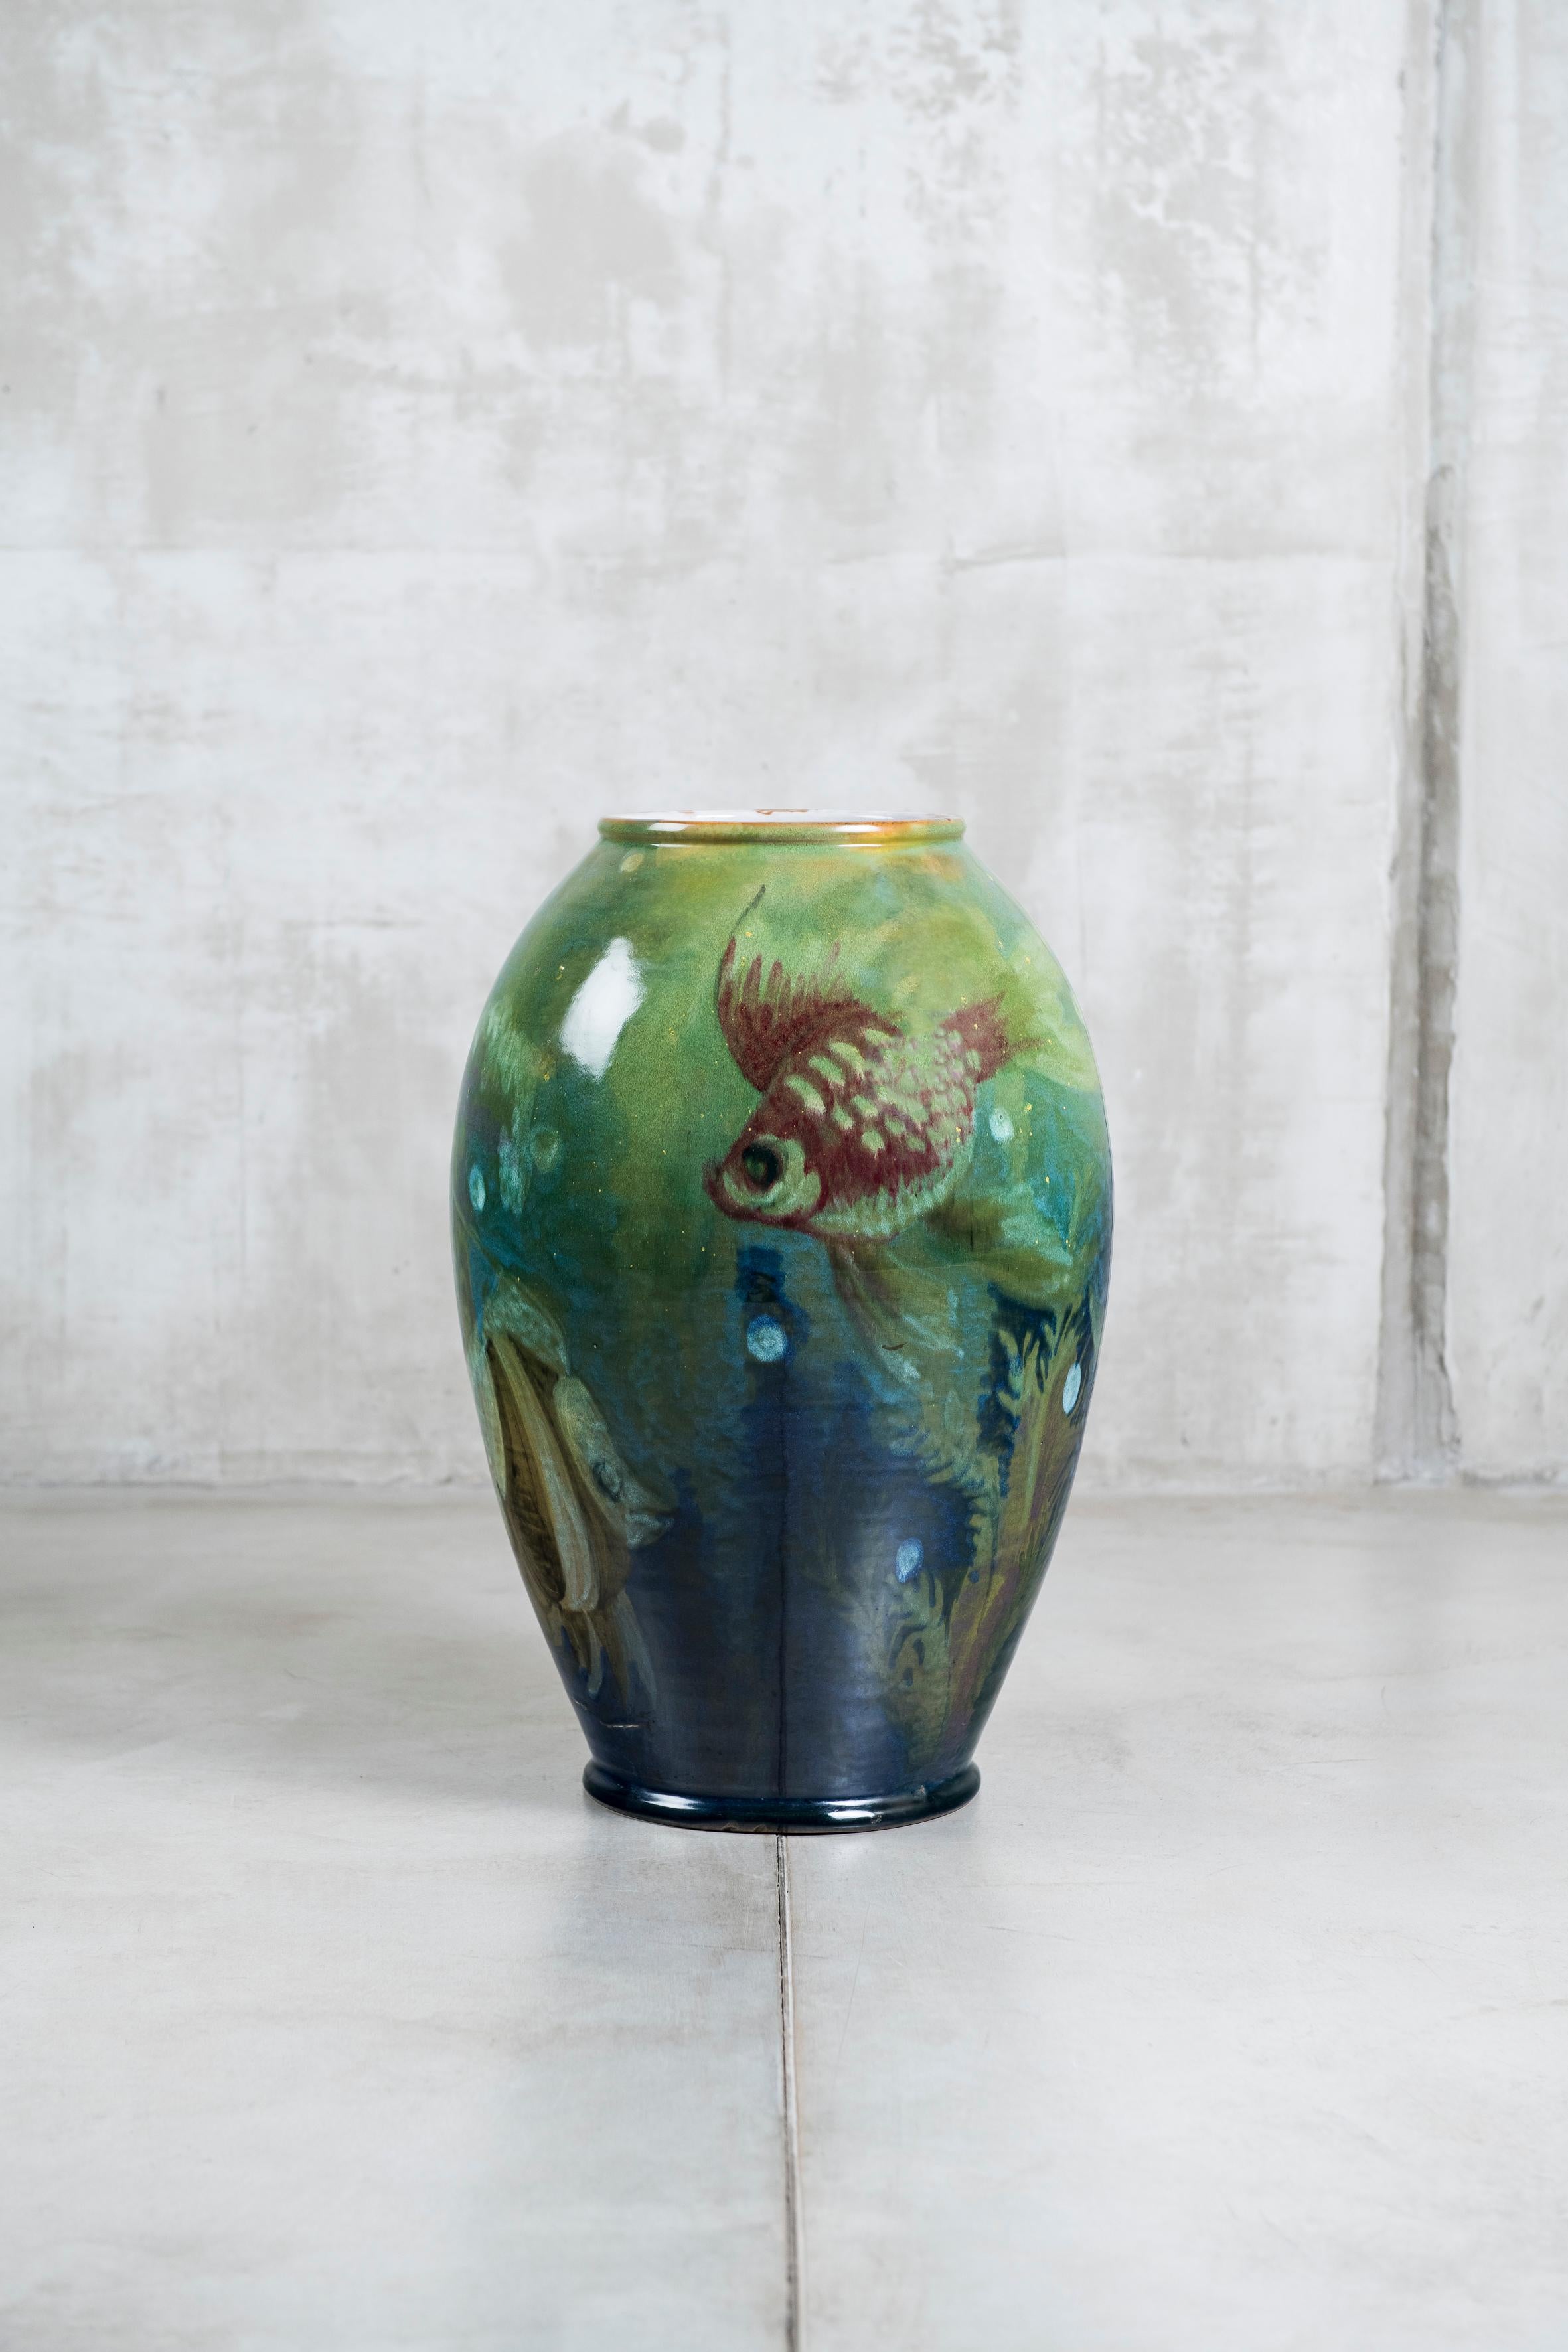 Enamel ceramic flower vase by Fabbri Davide for La Salamandra, Perugia, Italy, circa 1923-1930.